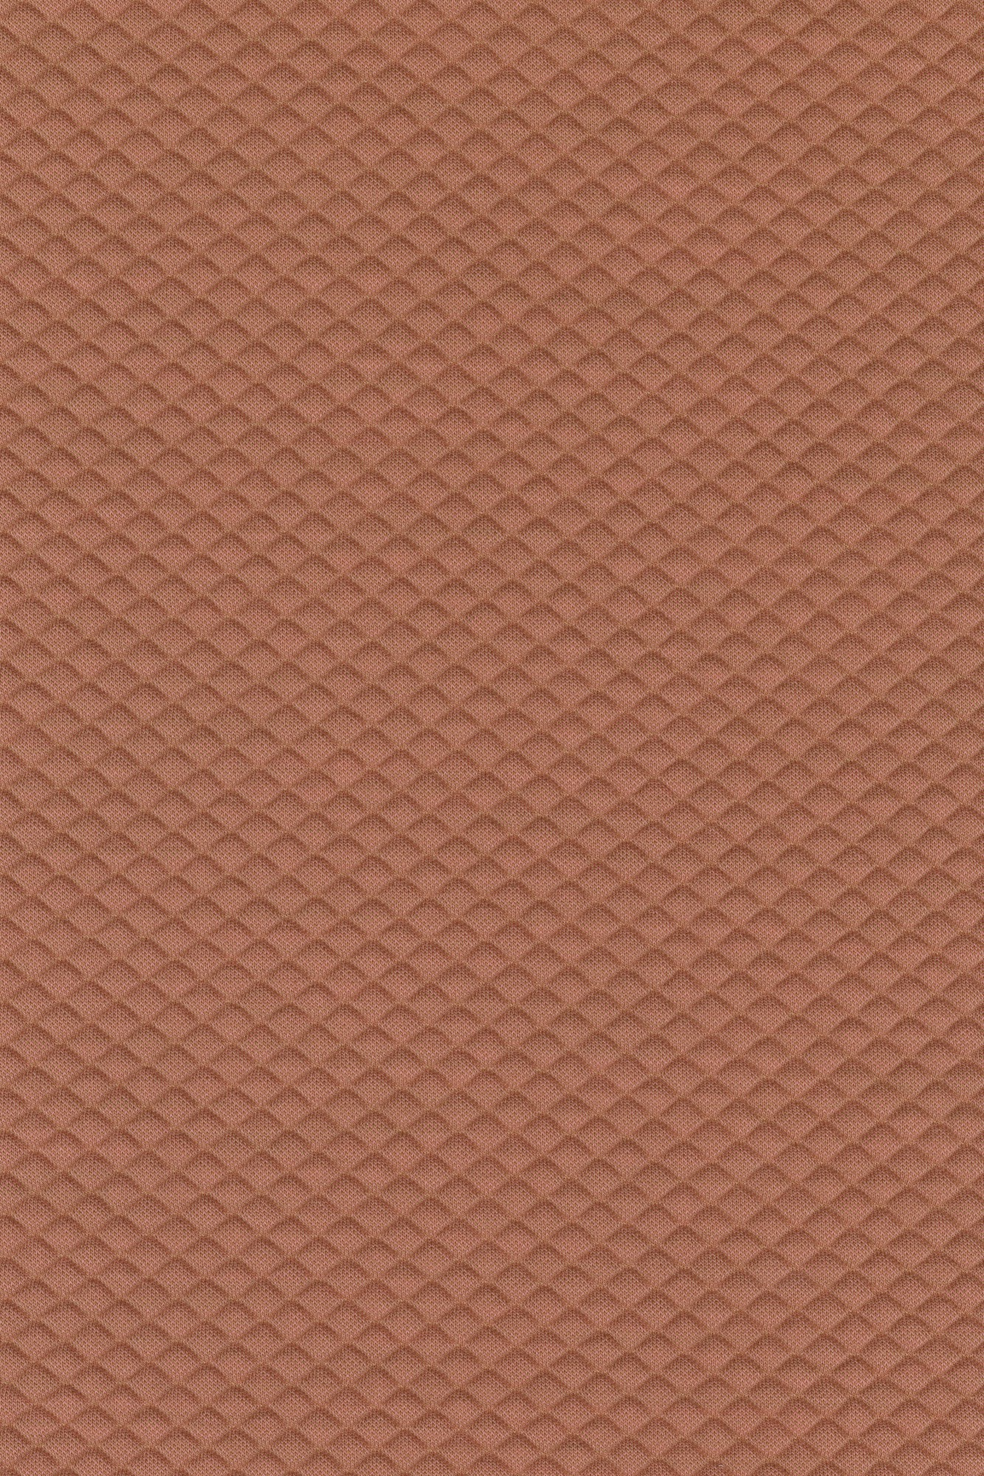 Fabric sample Mosaic 2 0532 pink